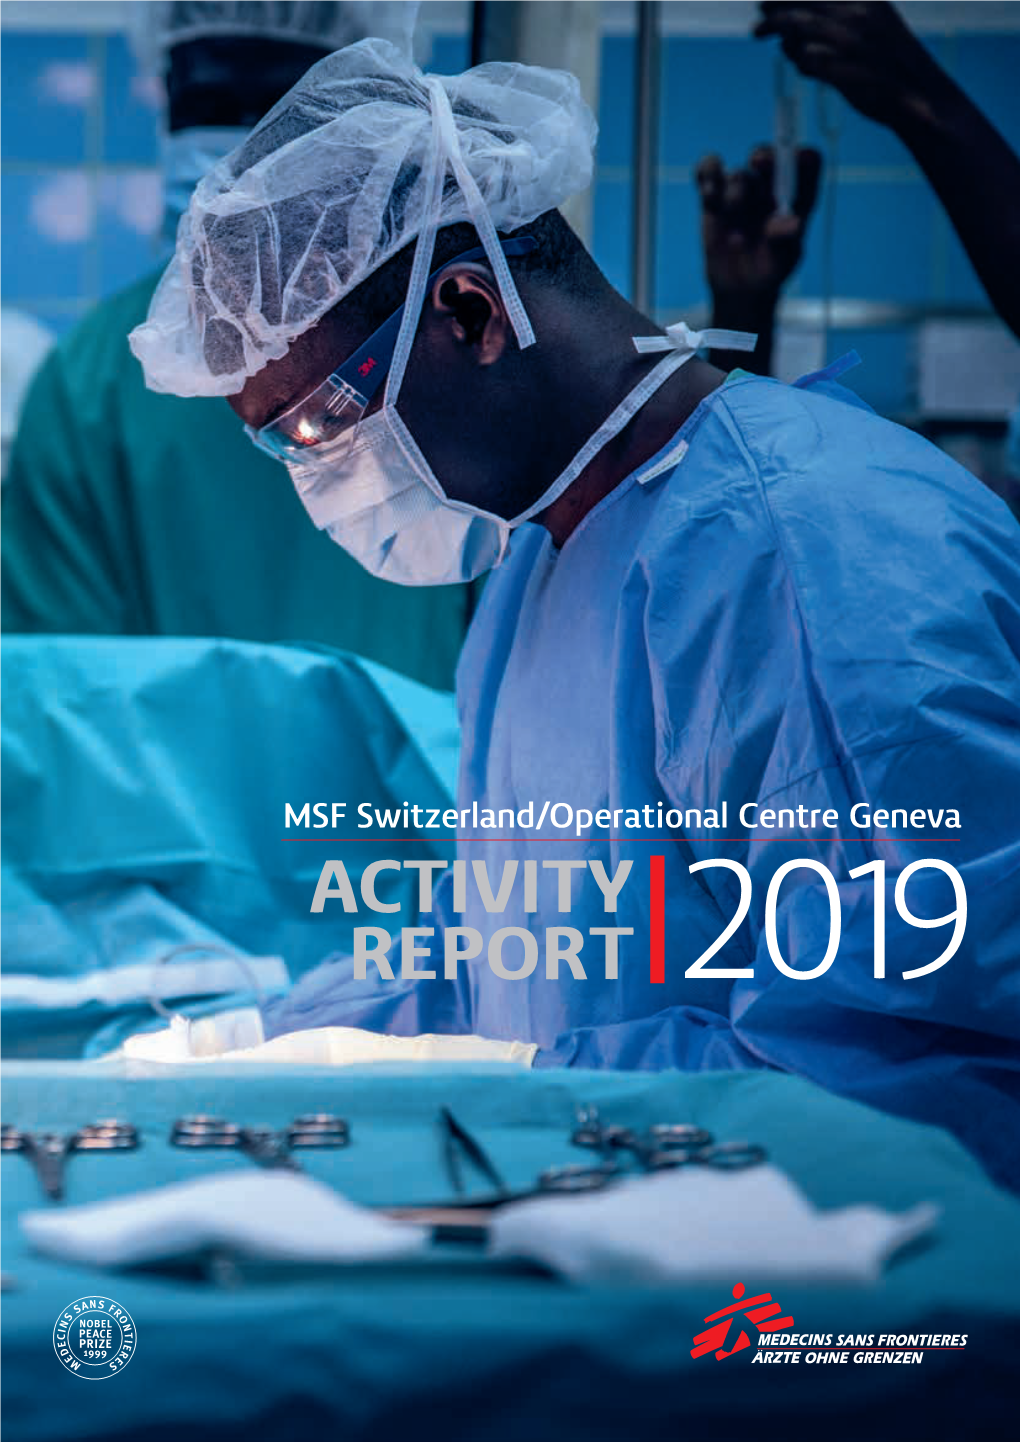 Activity Report 2018